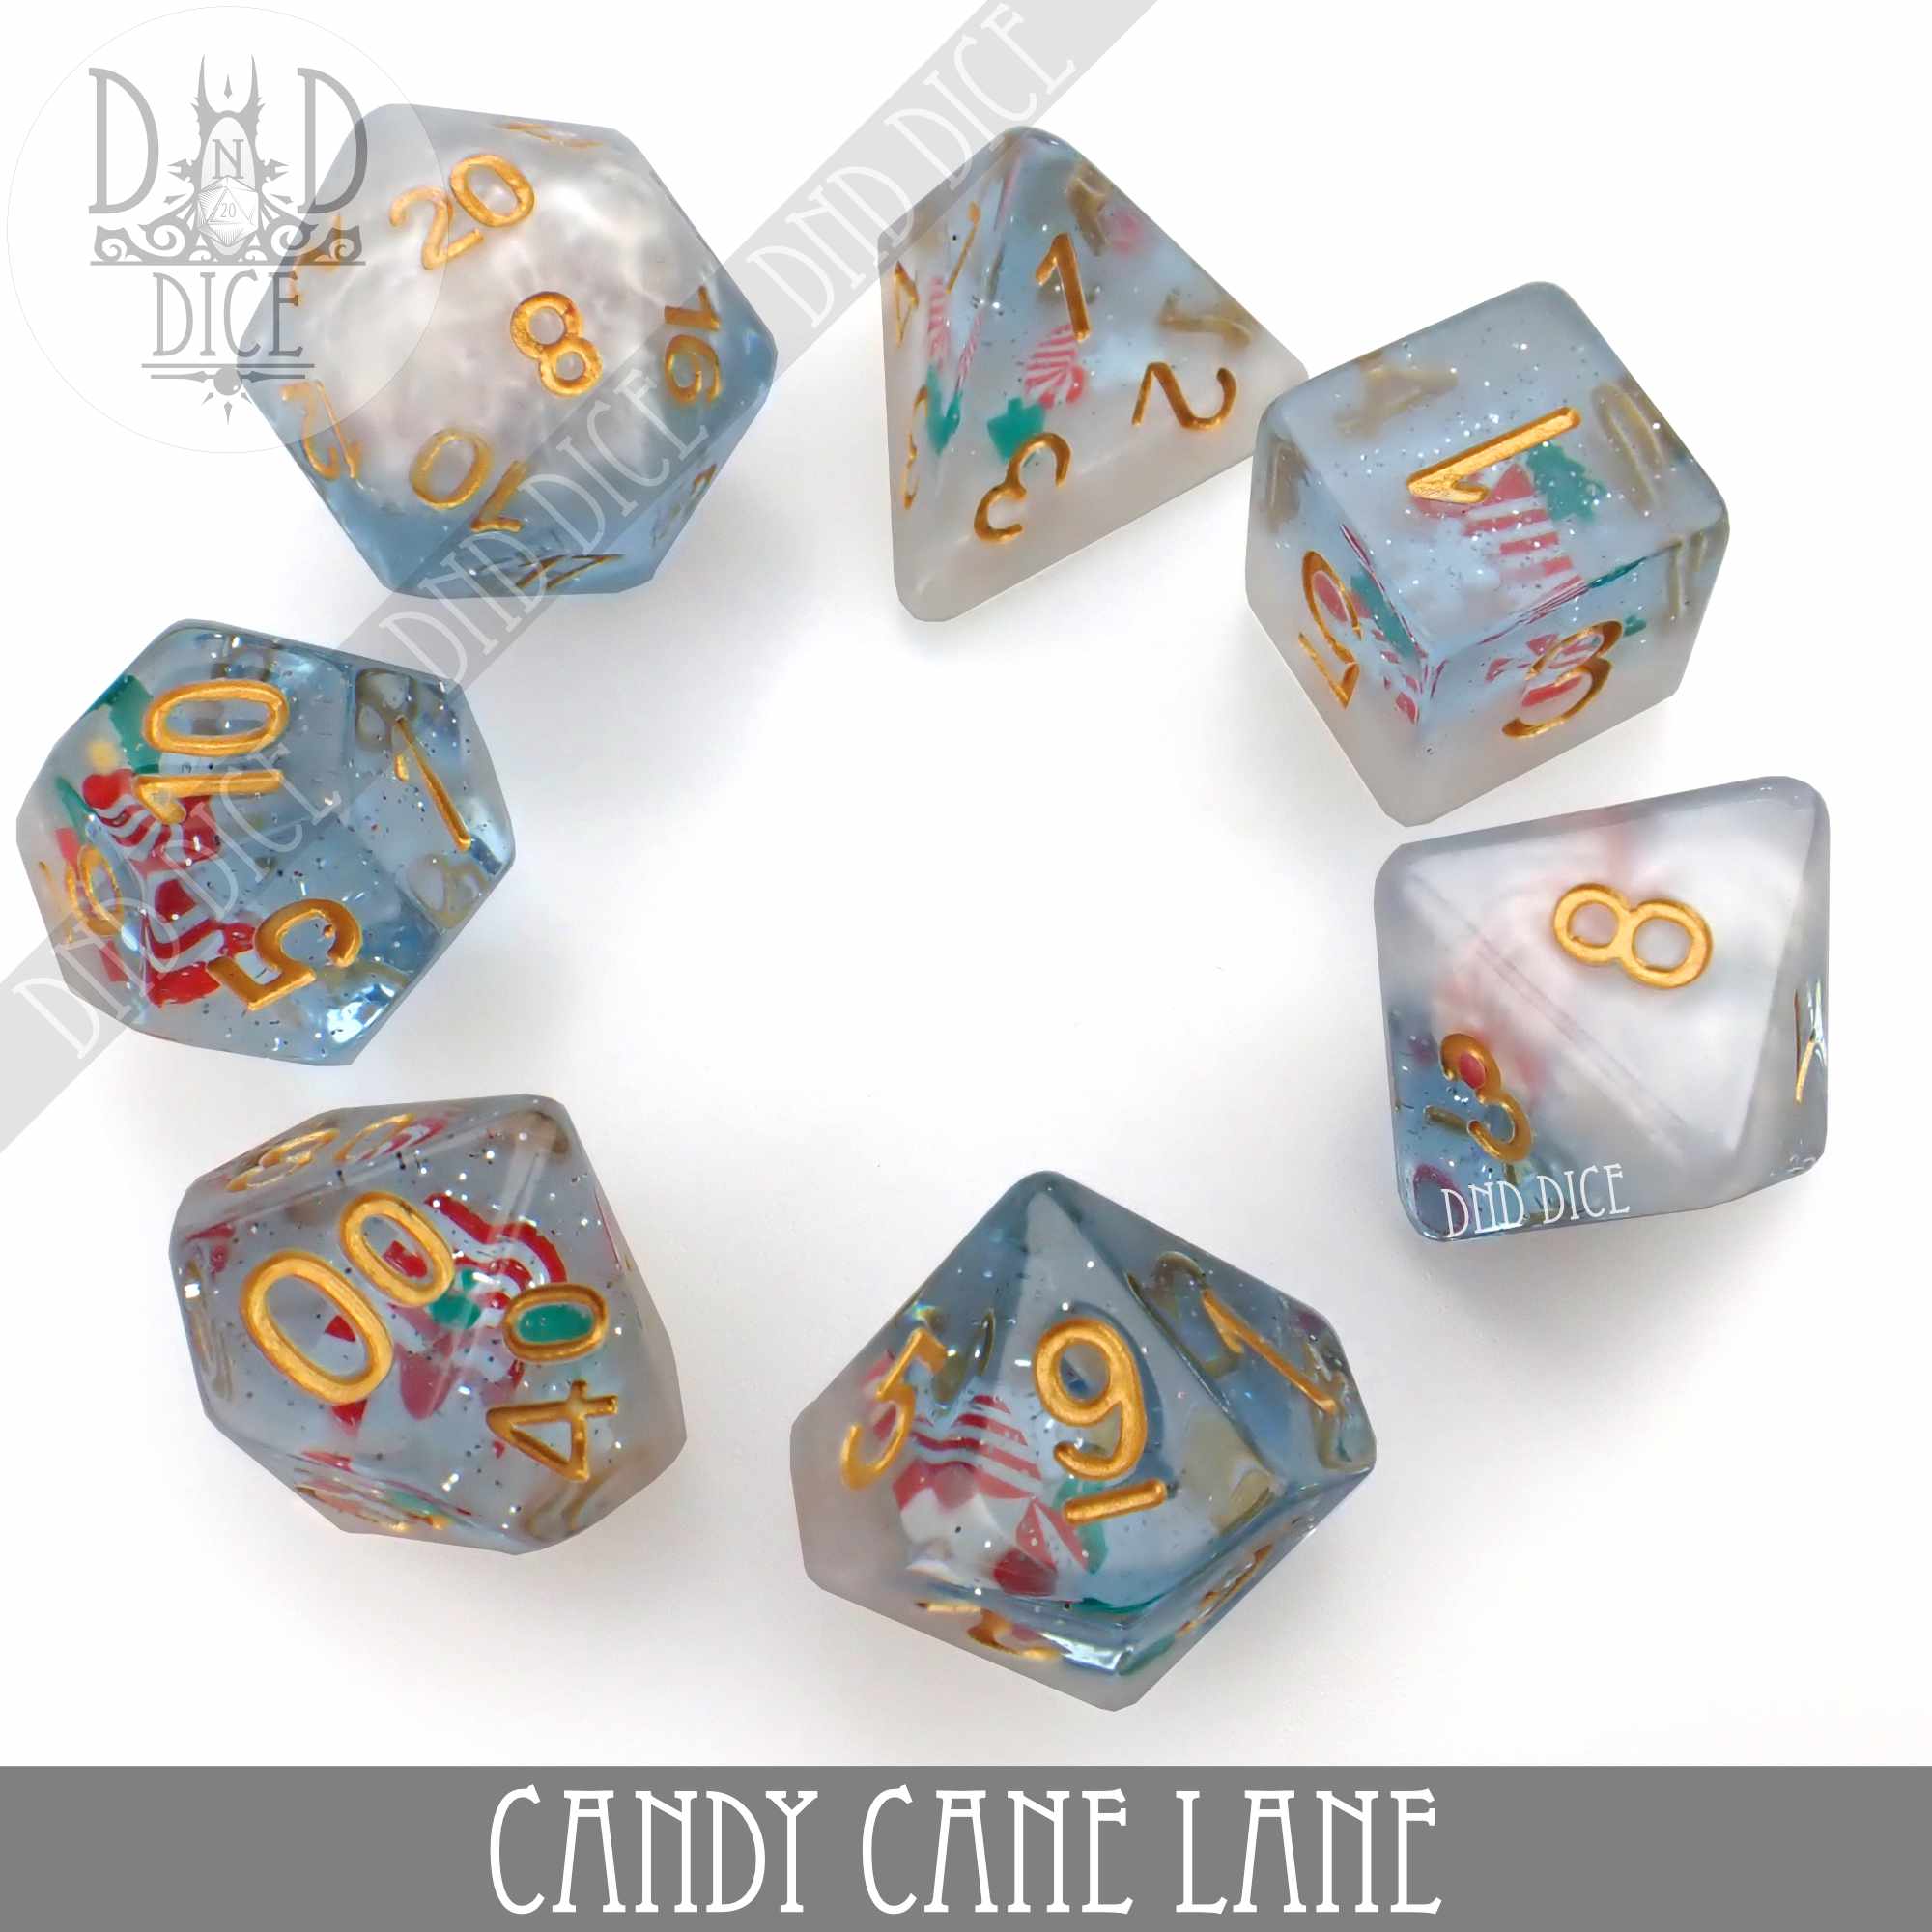 Candy Cane Lane Dice Set